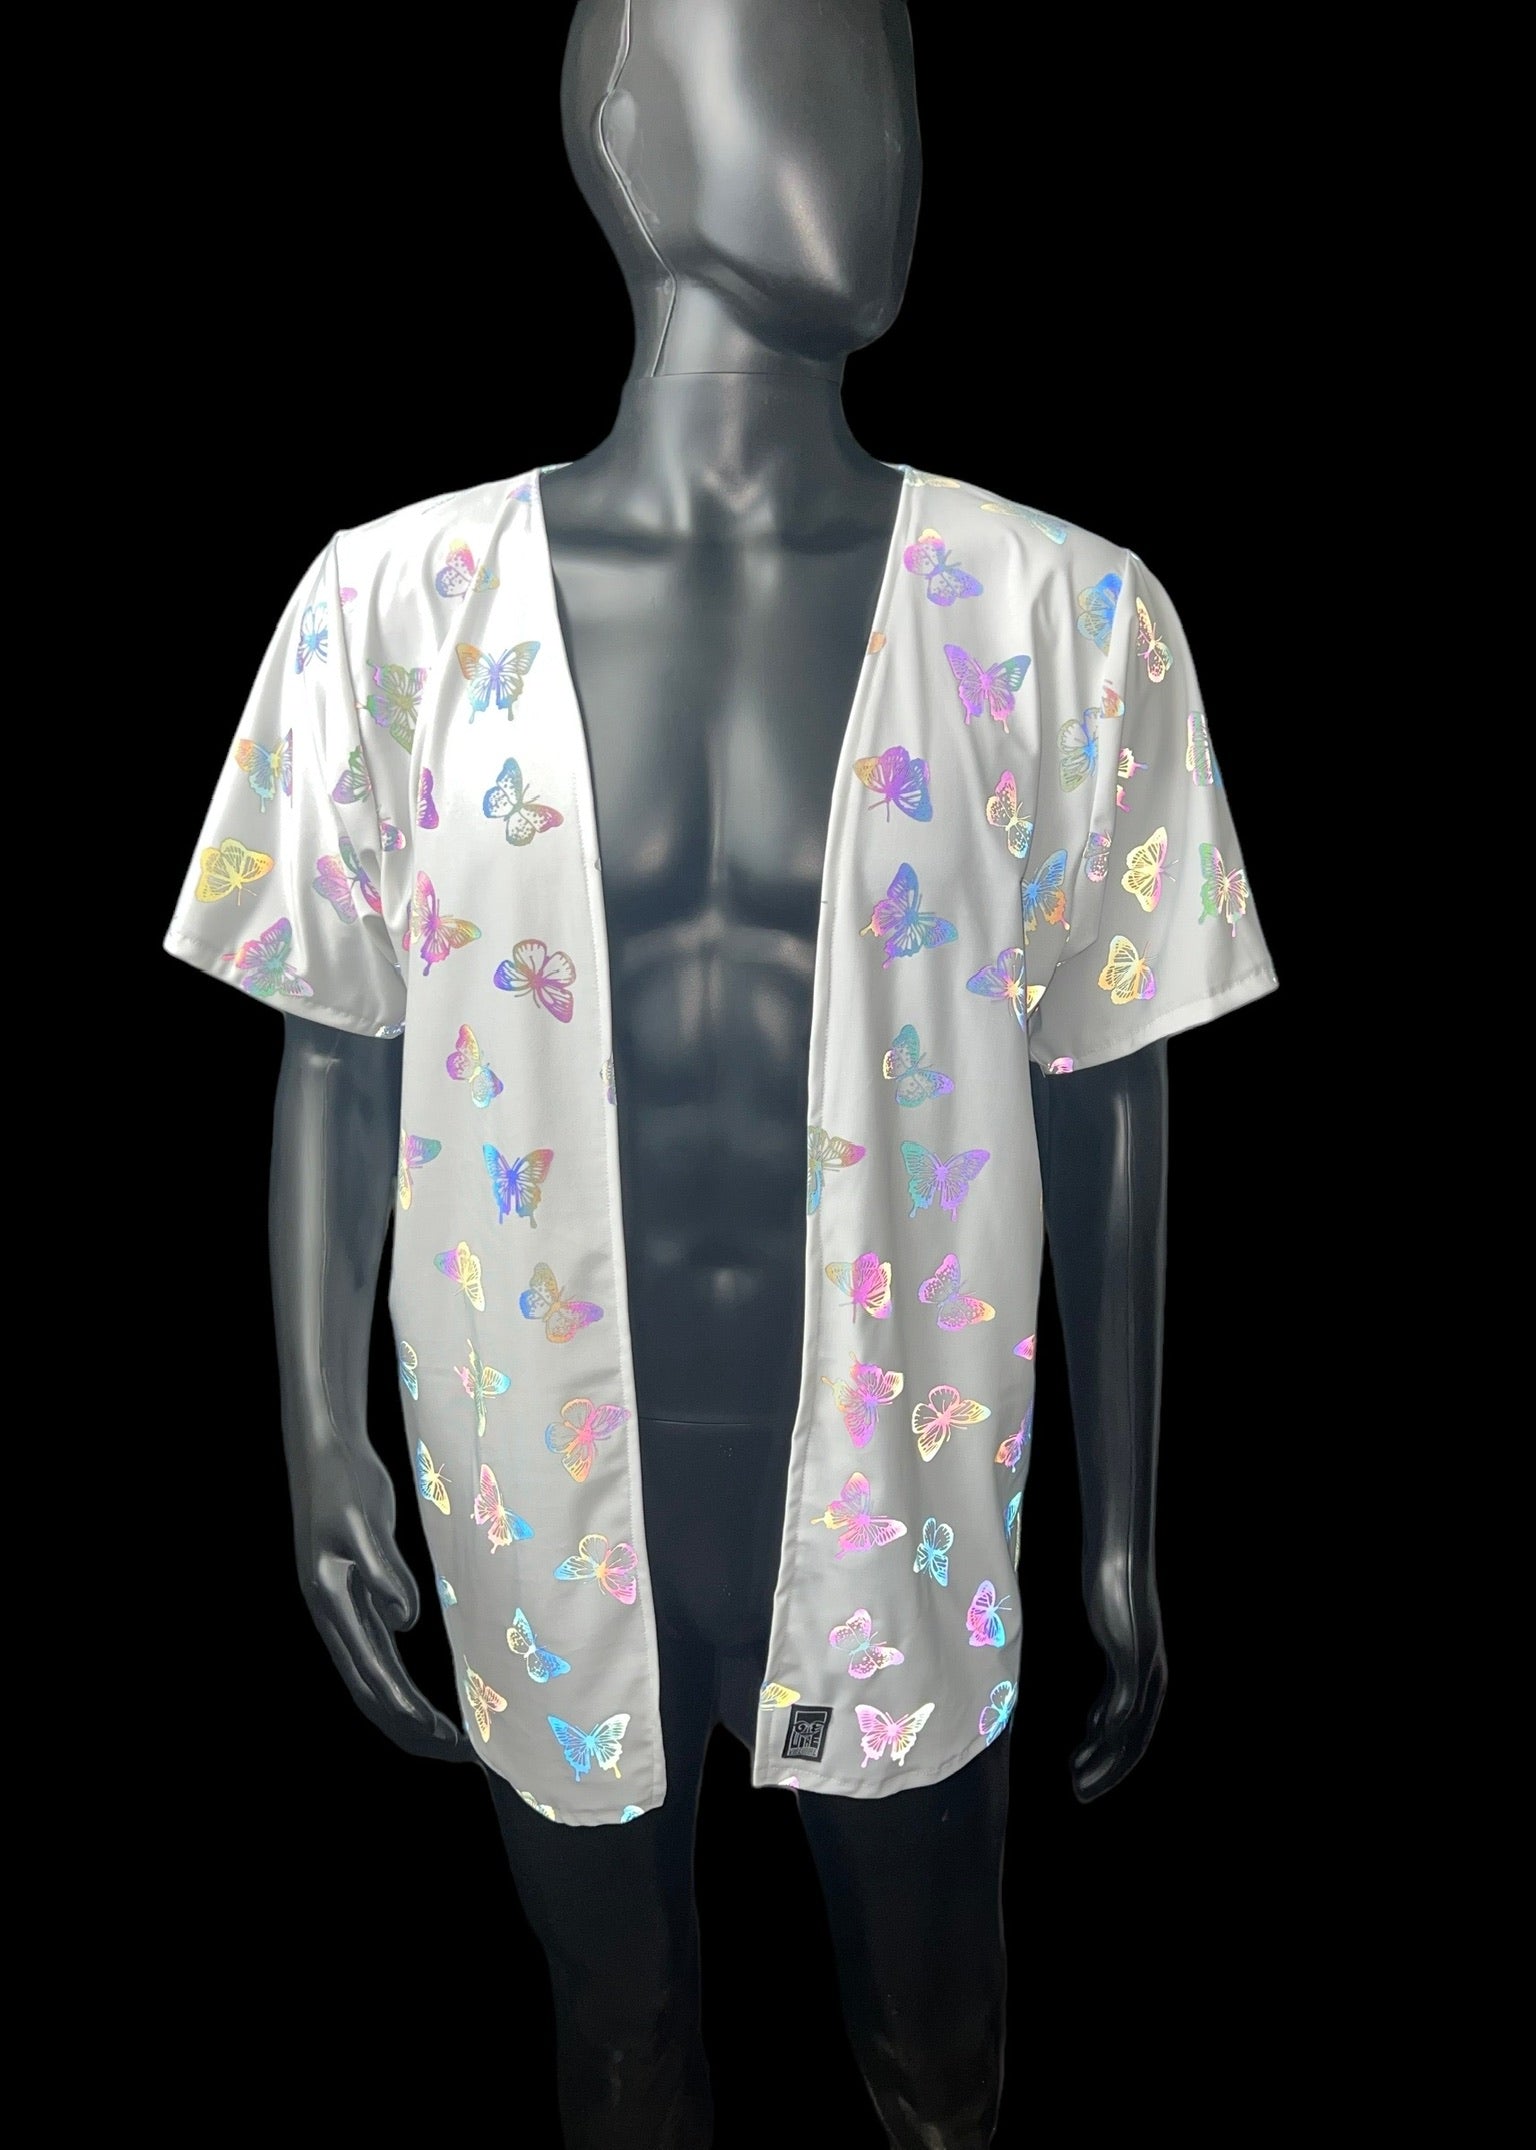 Men's festival clothing - Butterfly Vest - VibeWire